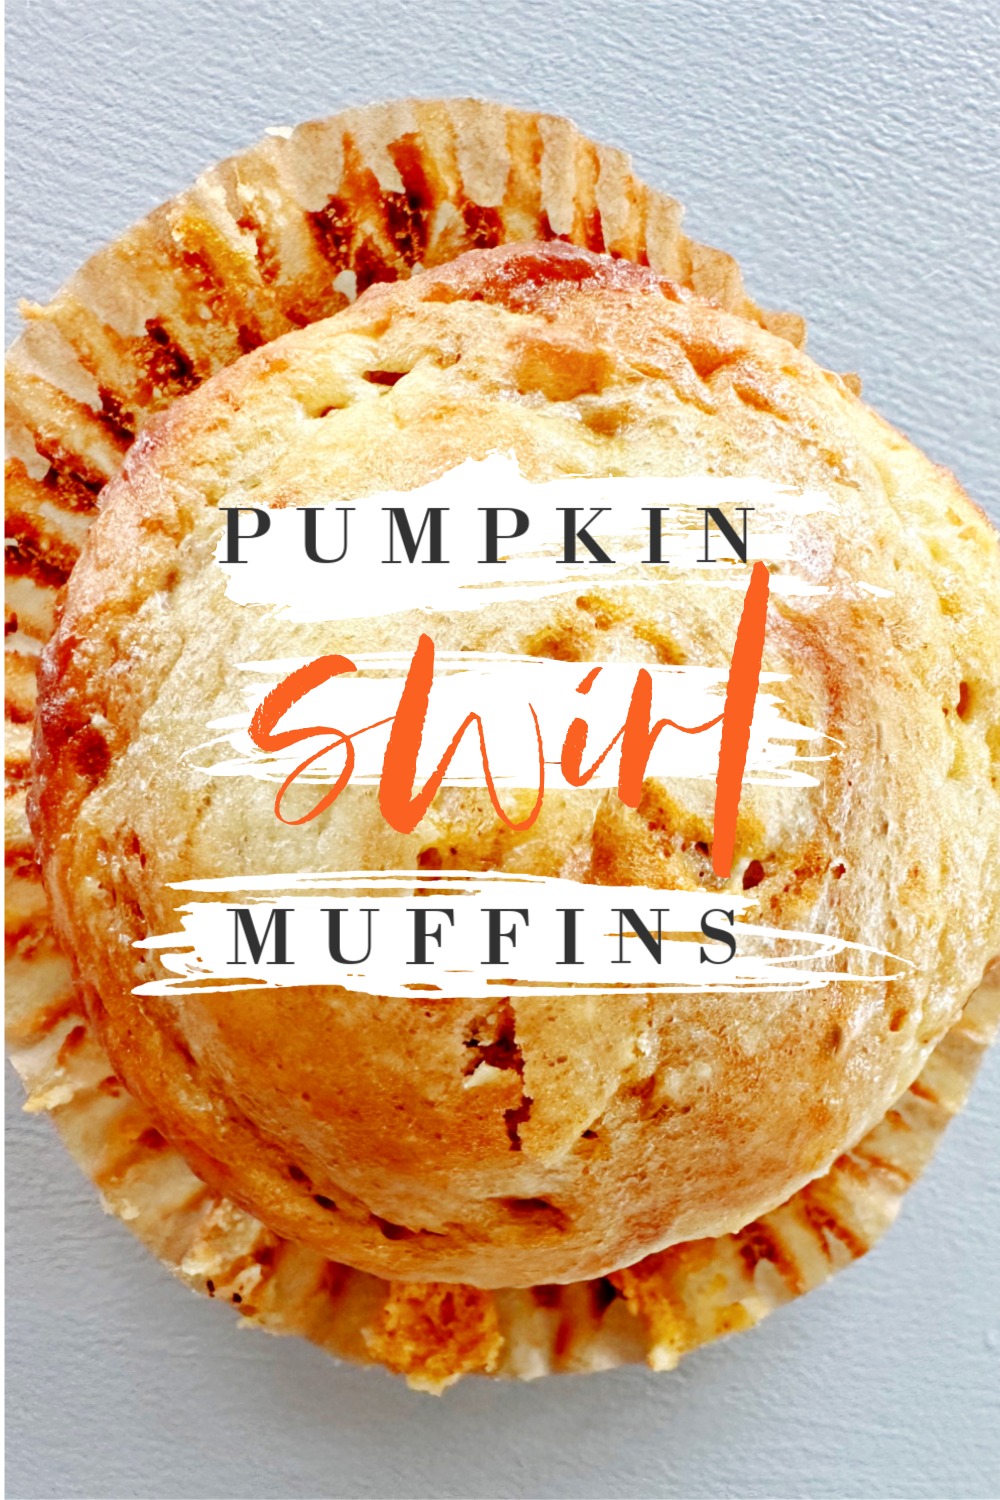 Pumpkin Swirl Muffins #pumpkin #muffins #breakfast #dessert #fallrecipe #easyrecipe